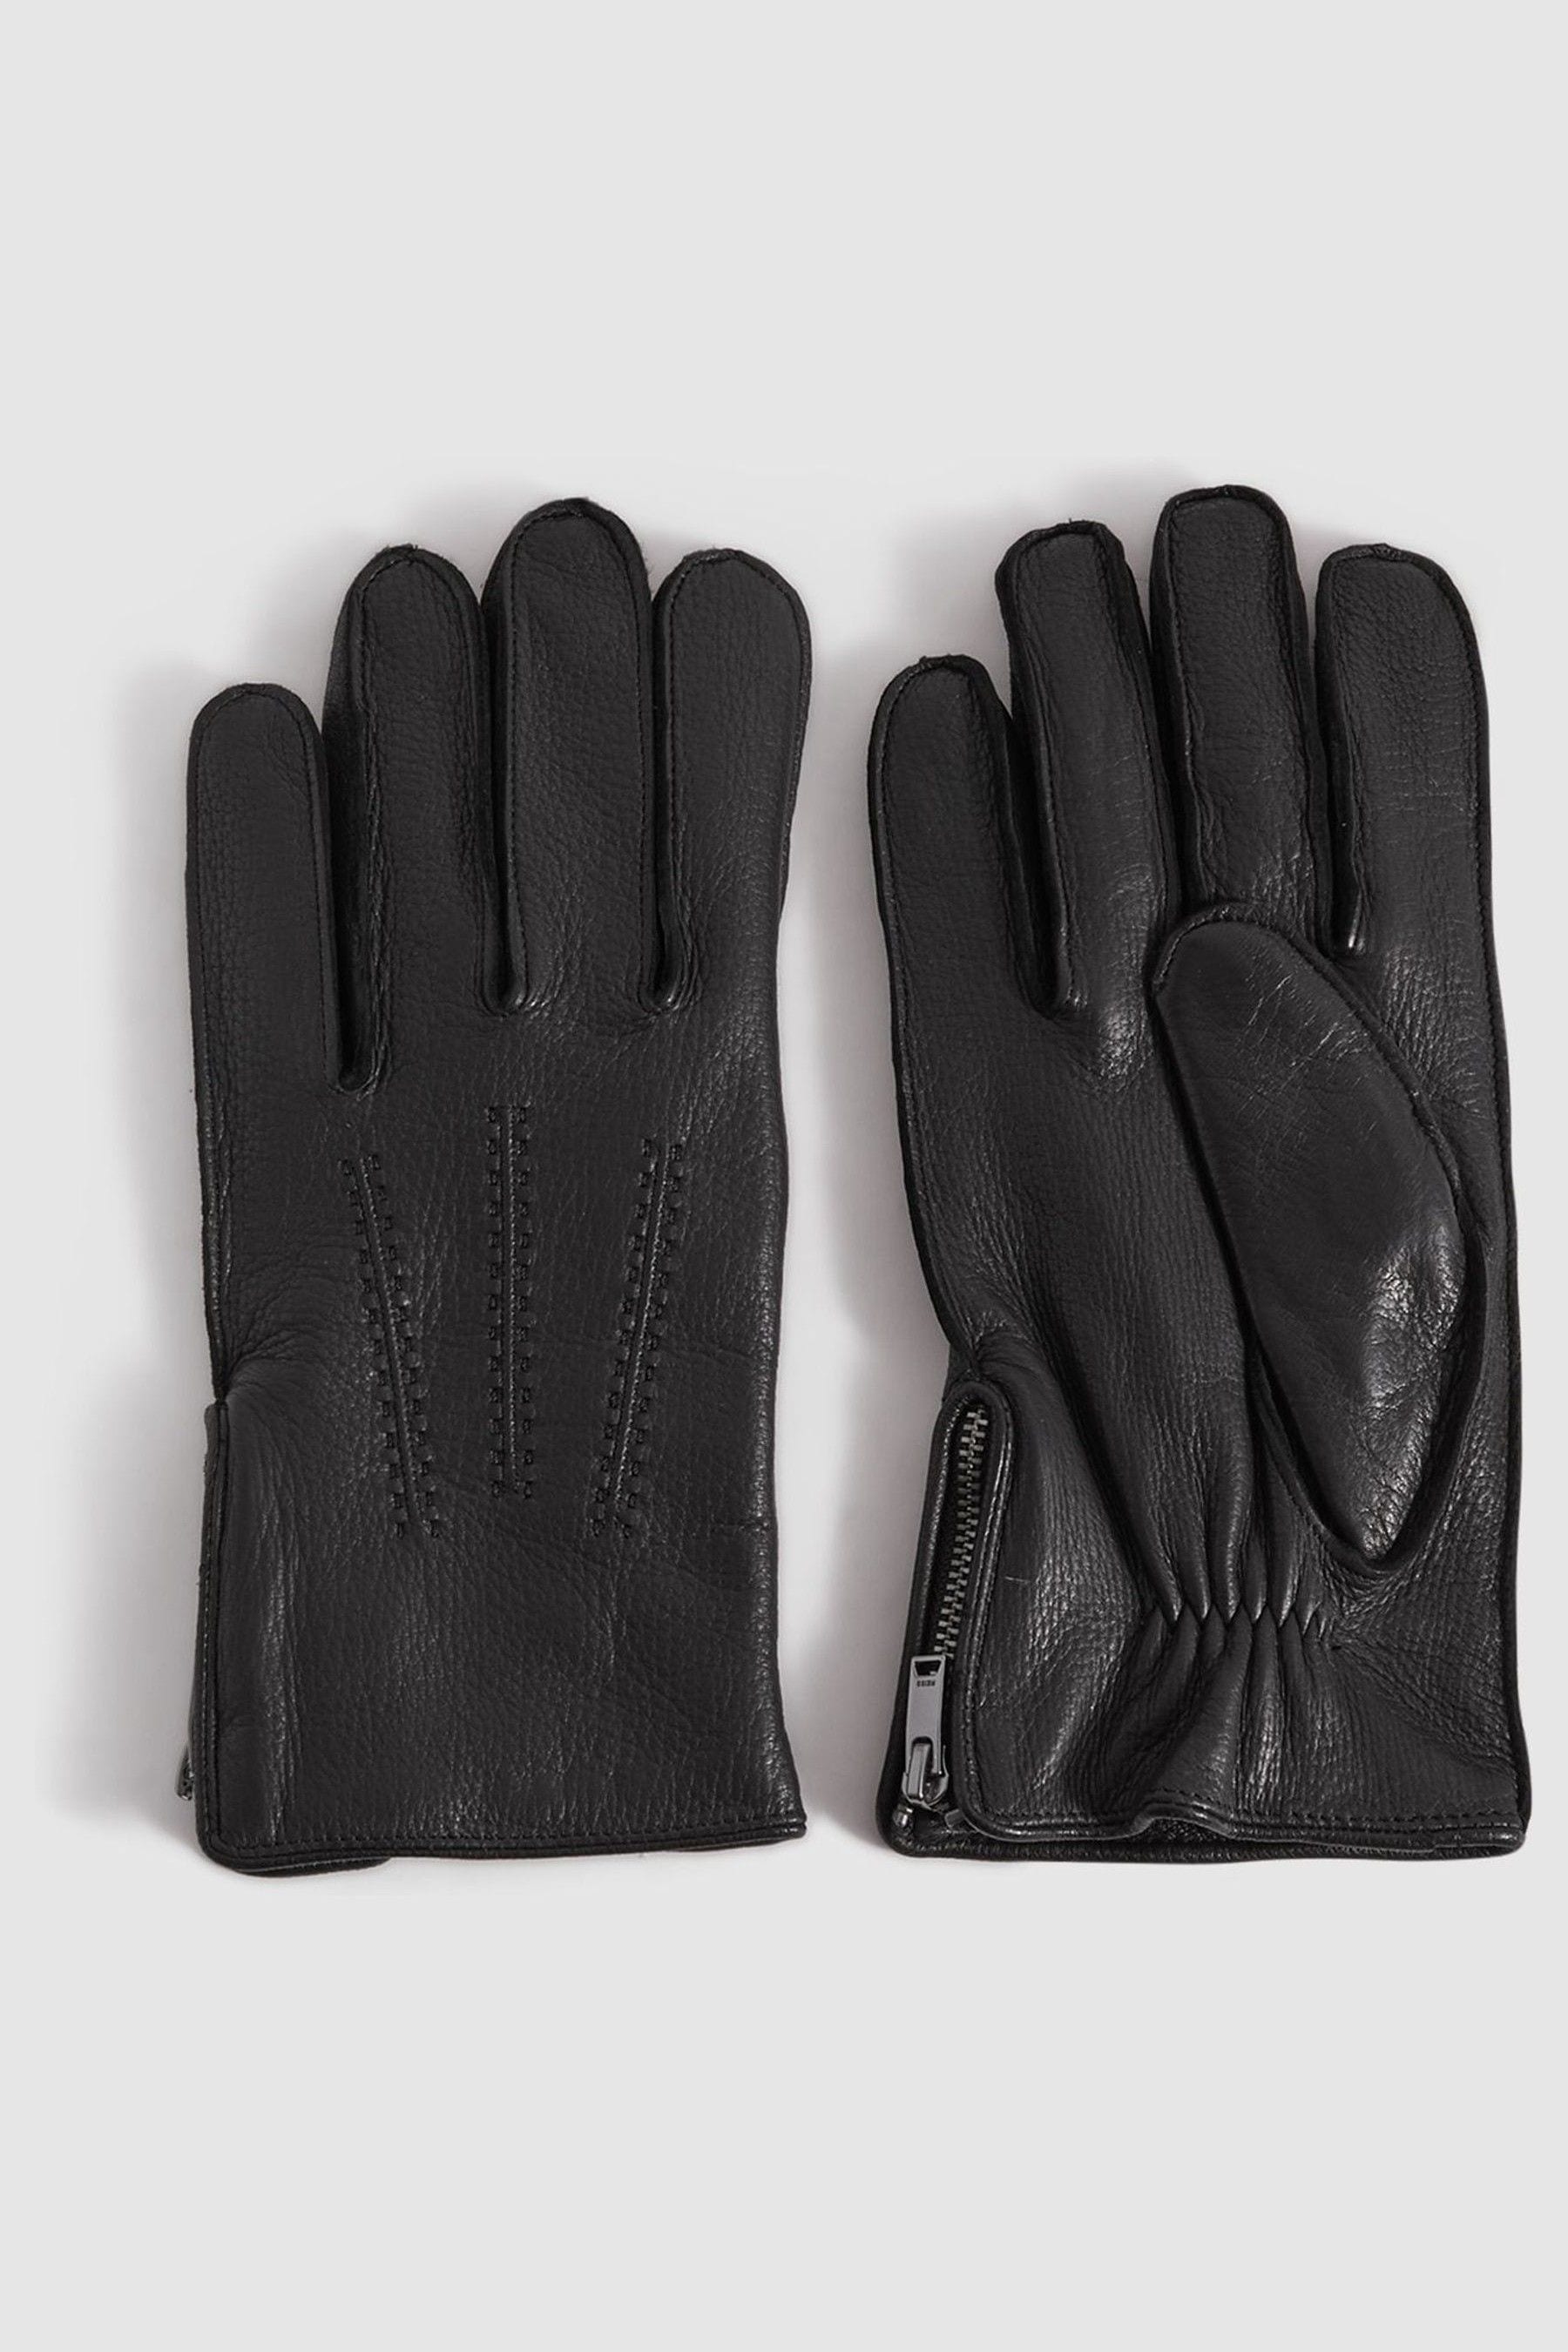 Reiss Iowa - Black Leather Gloves, L